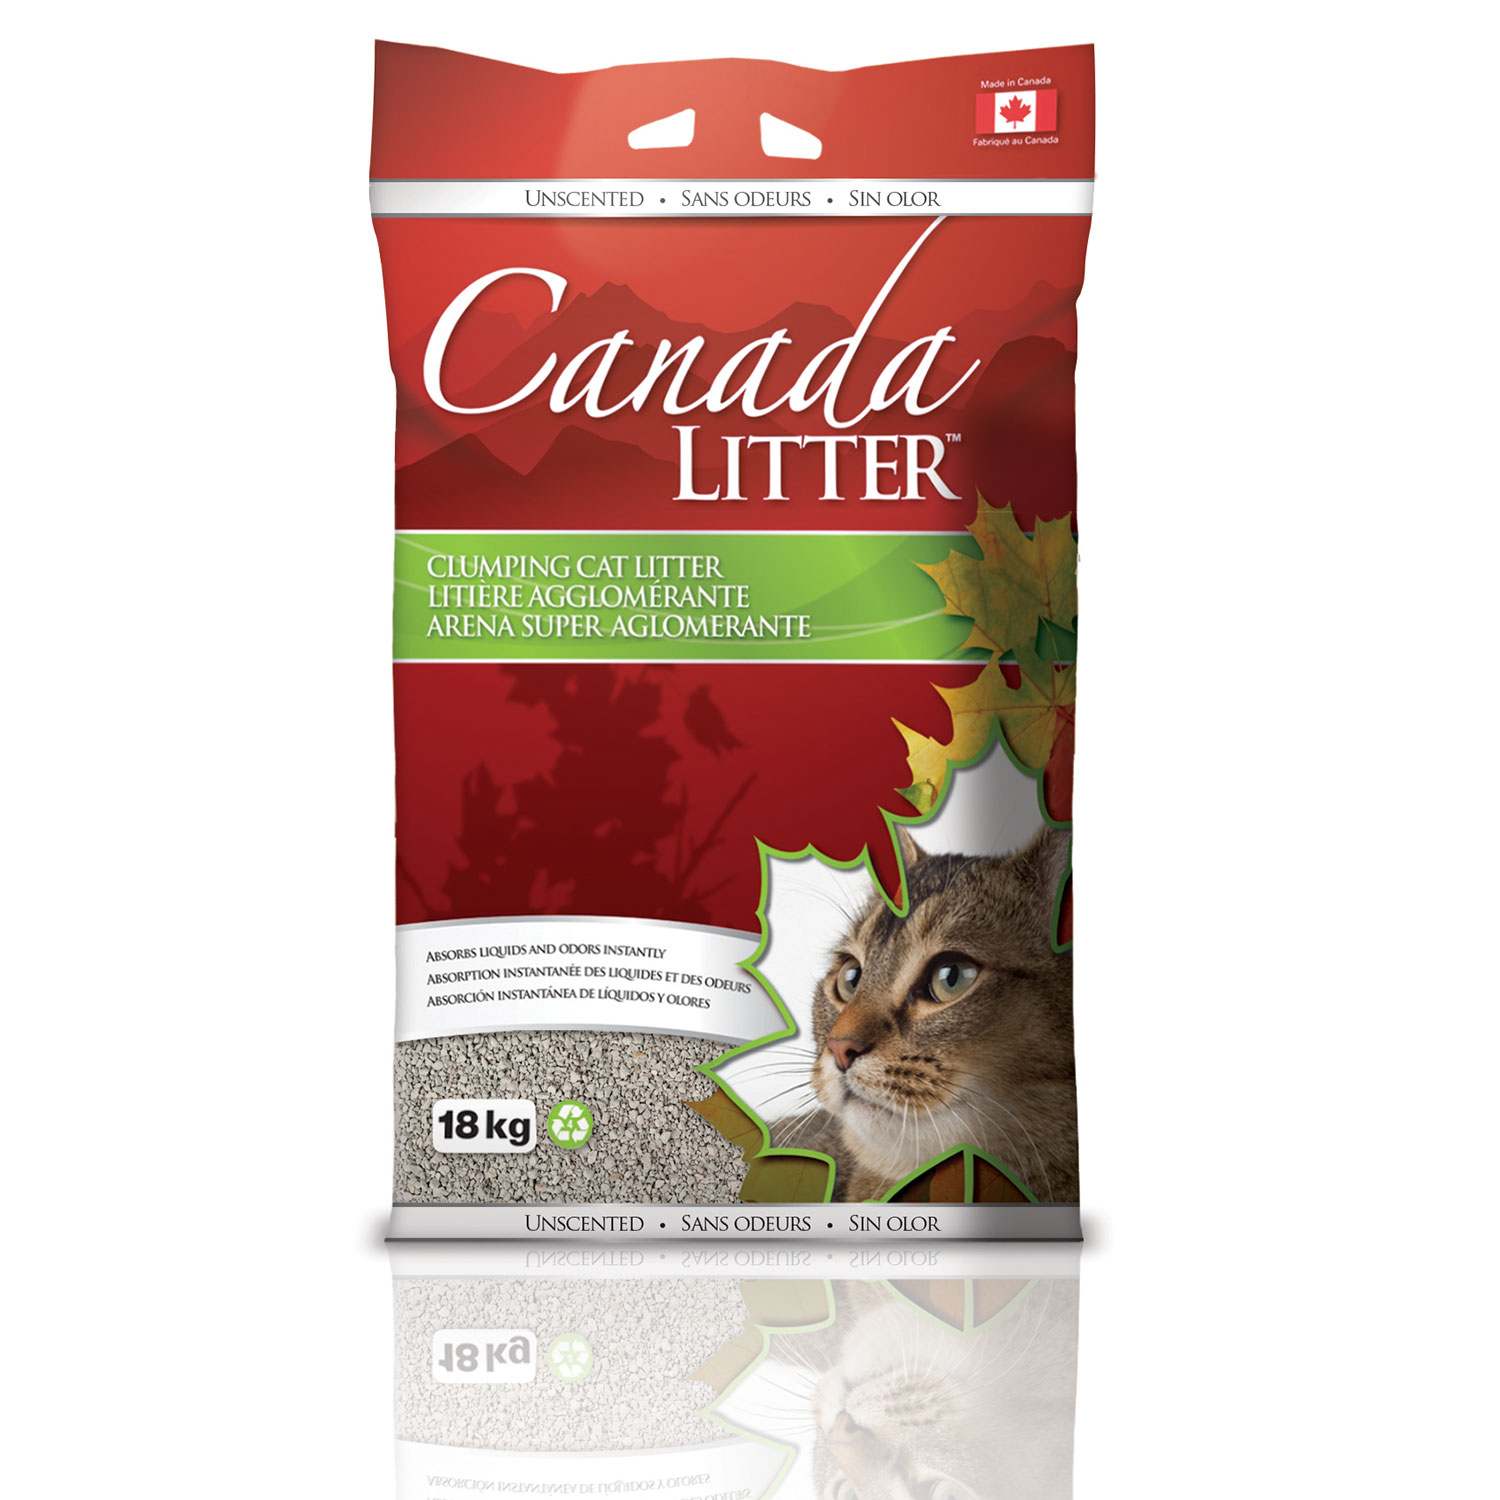 Canada (Cat Litter) 18KG - Unscented